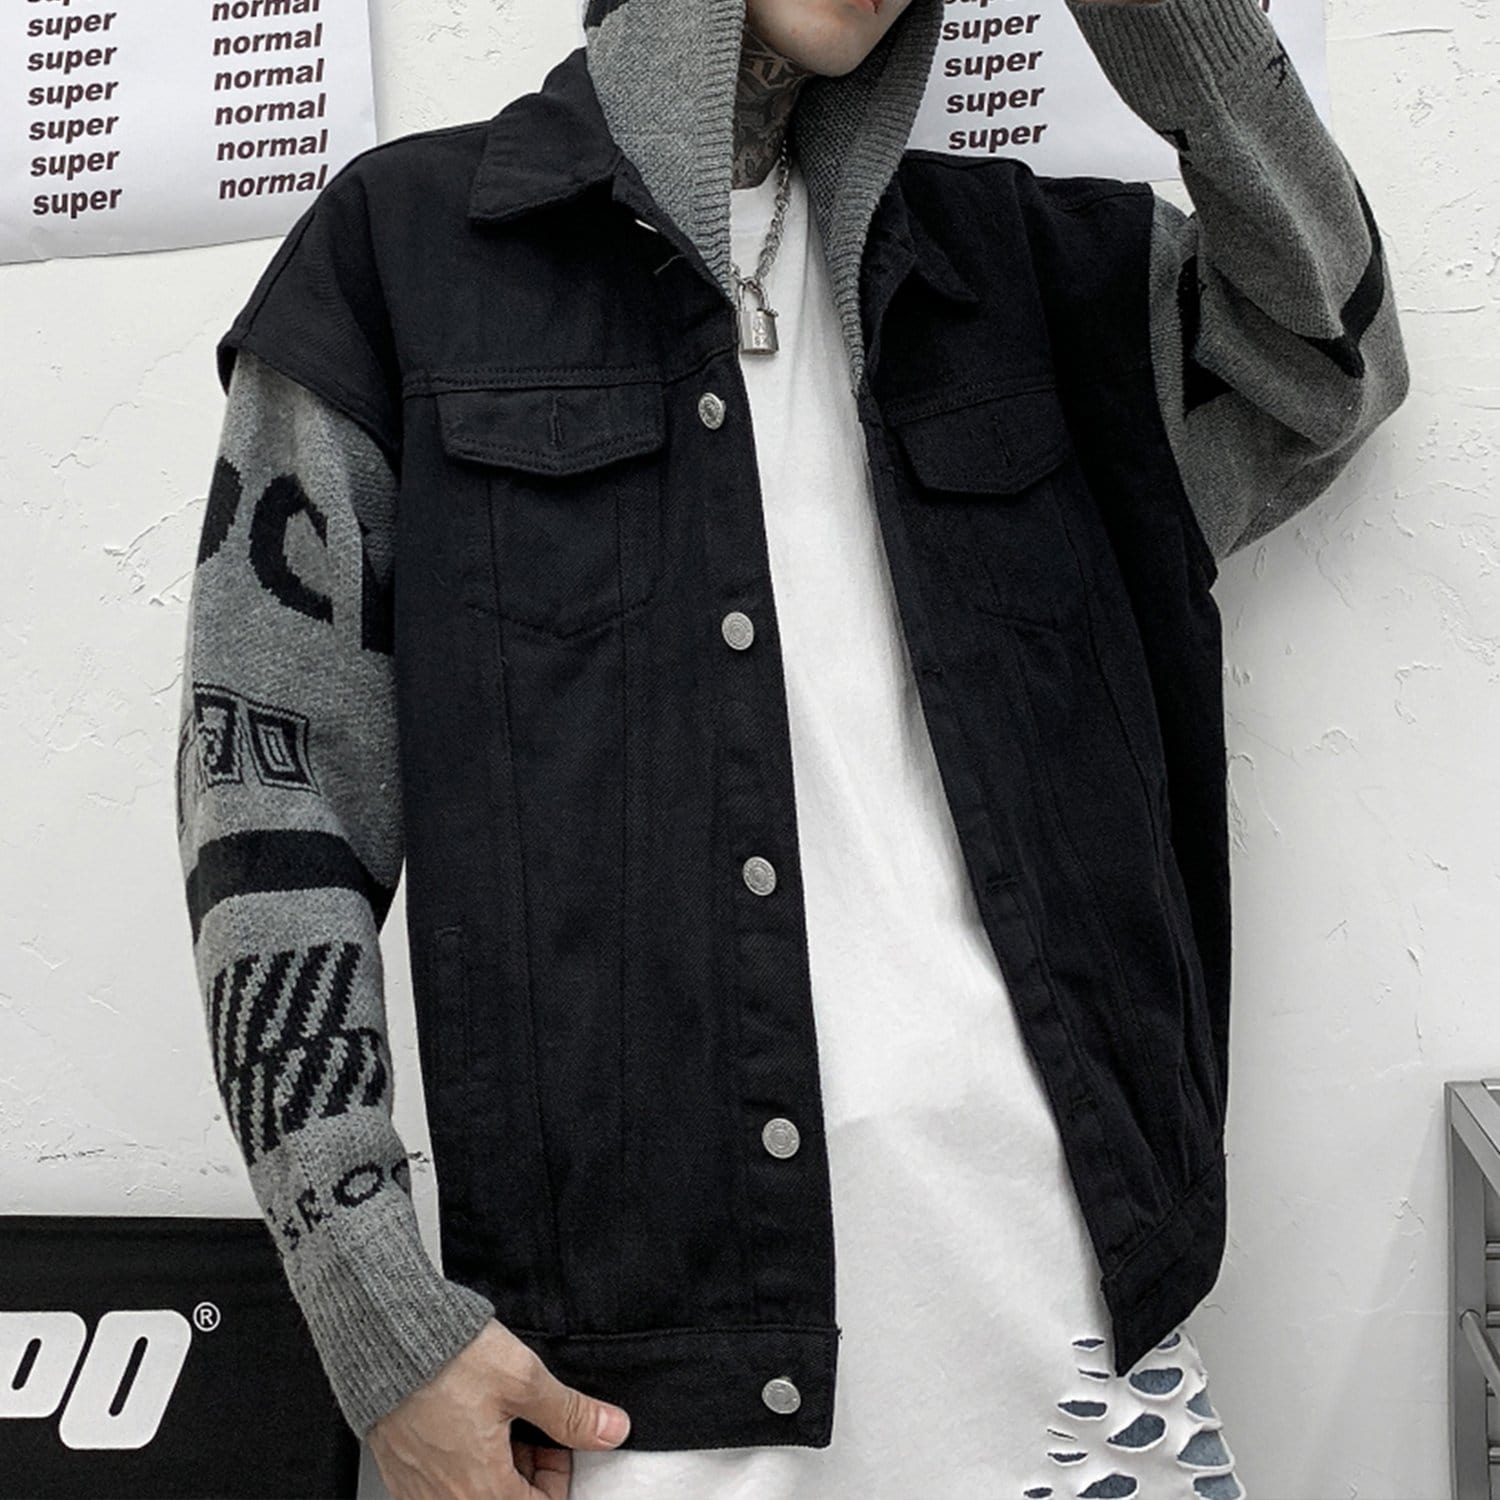 "Alphabet" Hooded Jacket Streetwear Brand Techwear Combat Tactical YUGEN THEORY